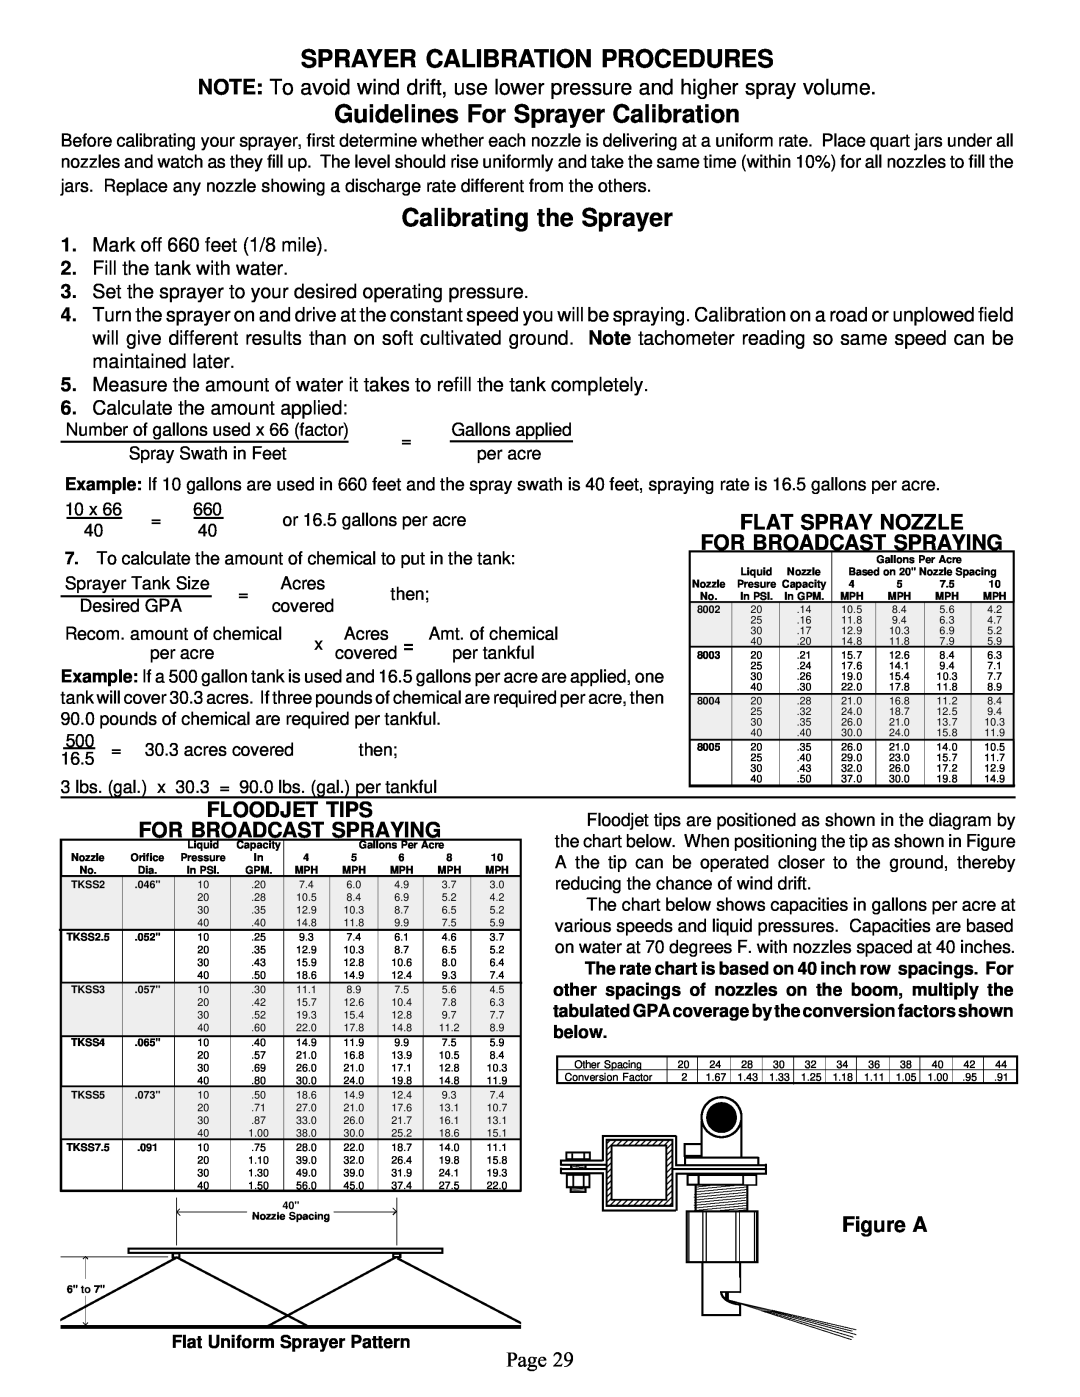 Demco manual Sprayer Calibration Procedures, Guidelines For Sprayer Calibration, Calibrating the Sprayer, Page 